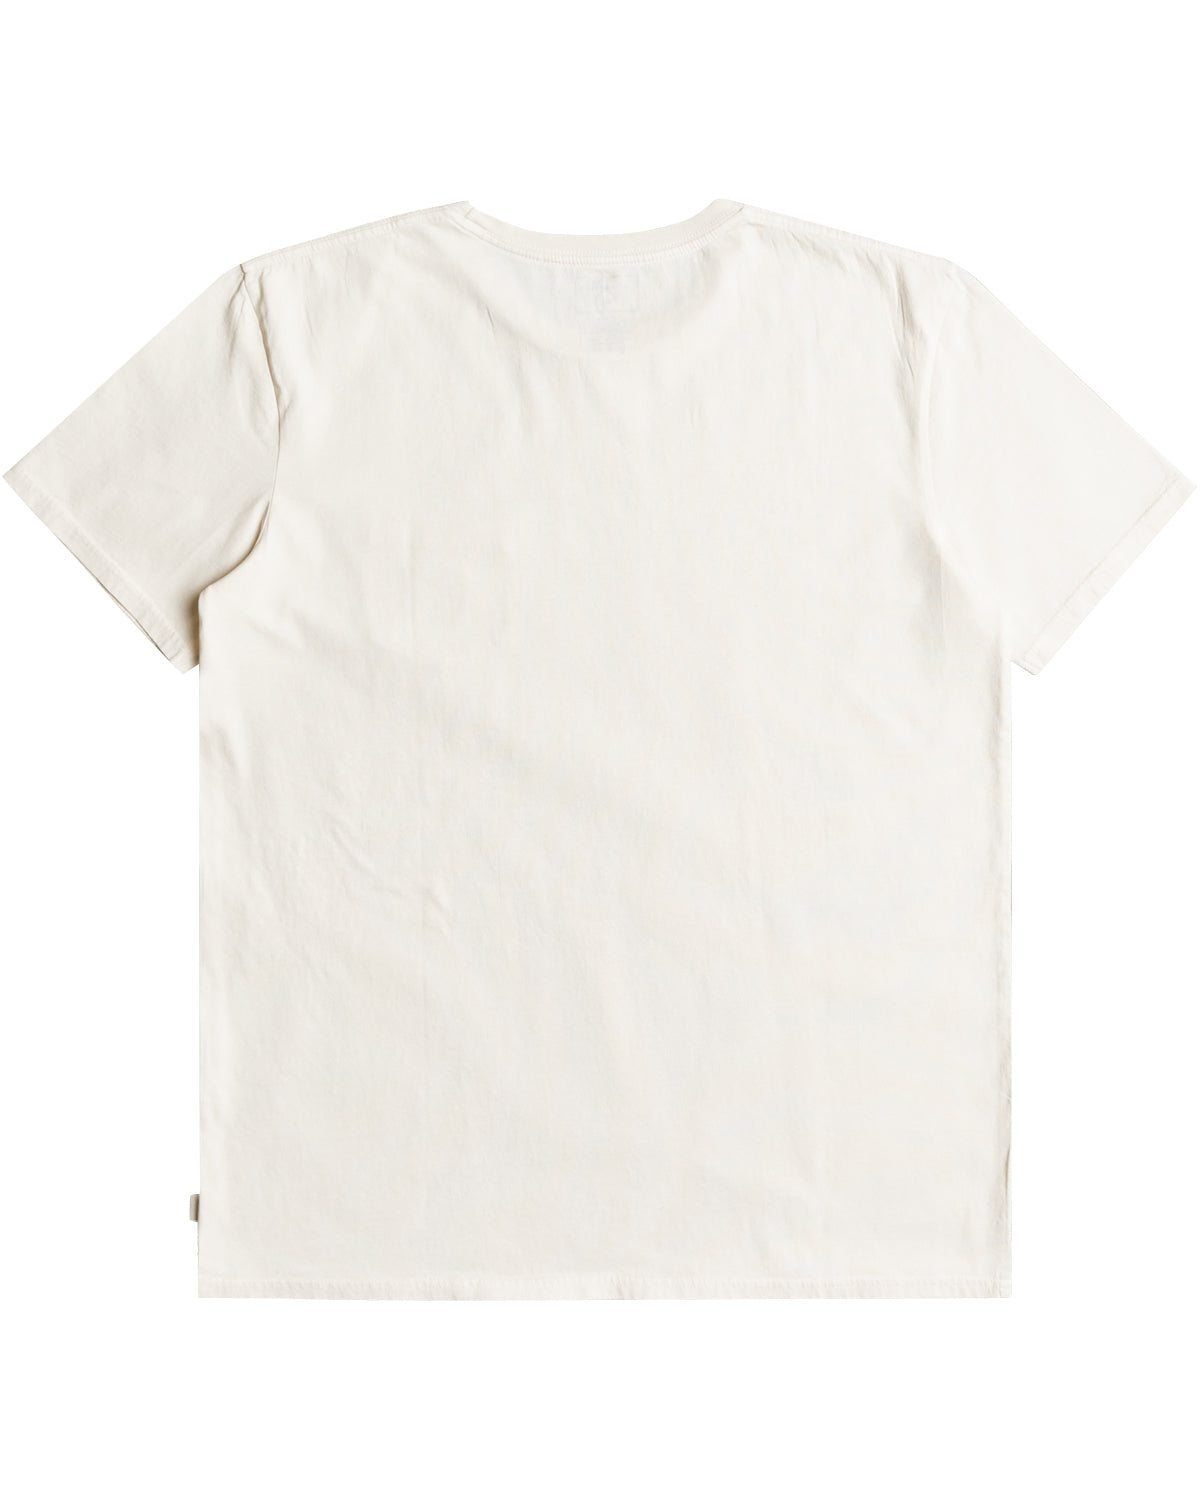 Quiksilver - Sub Mission SS Pocket T-Shirt White - Nahmoo